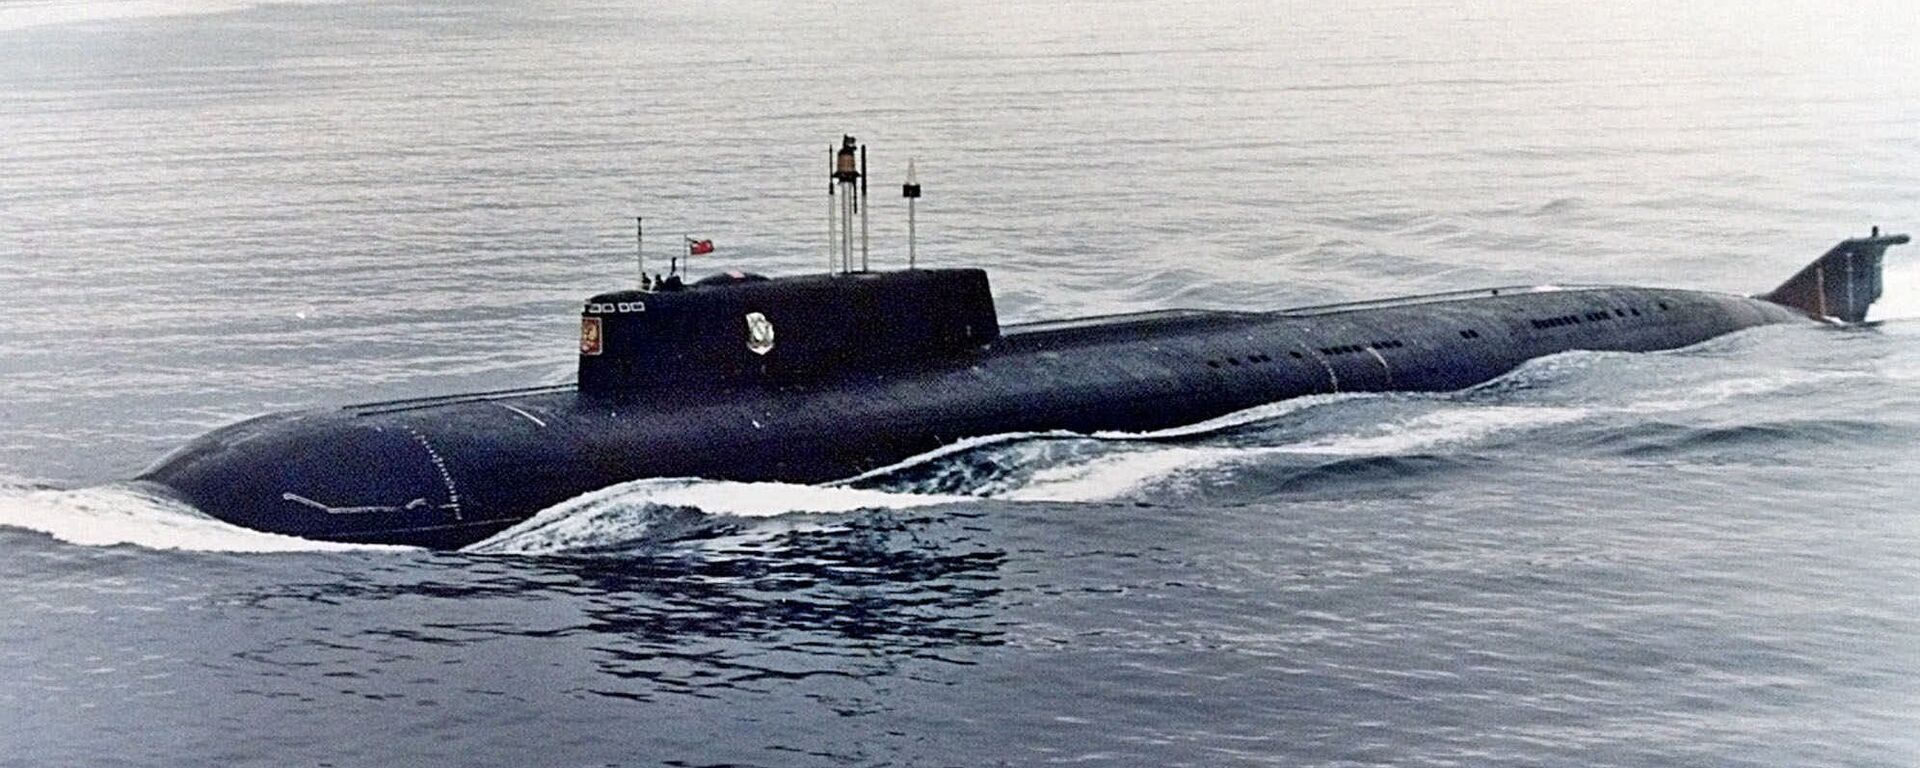 El submarino nuclear Kursk - Sputnik Mundo, 1920, 12.08.2019